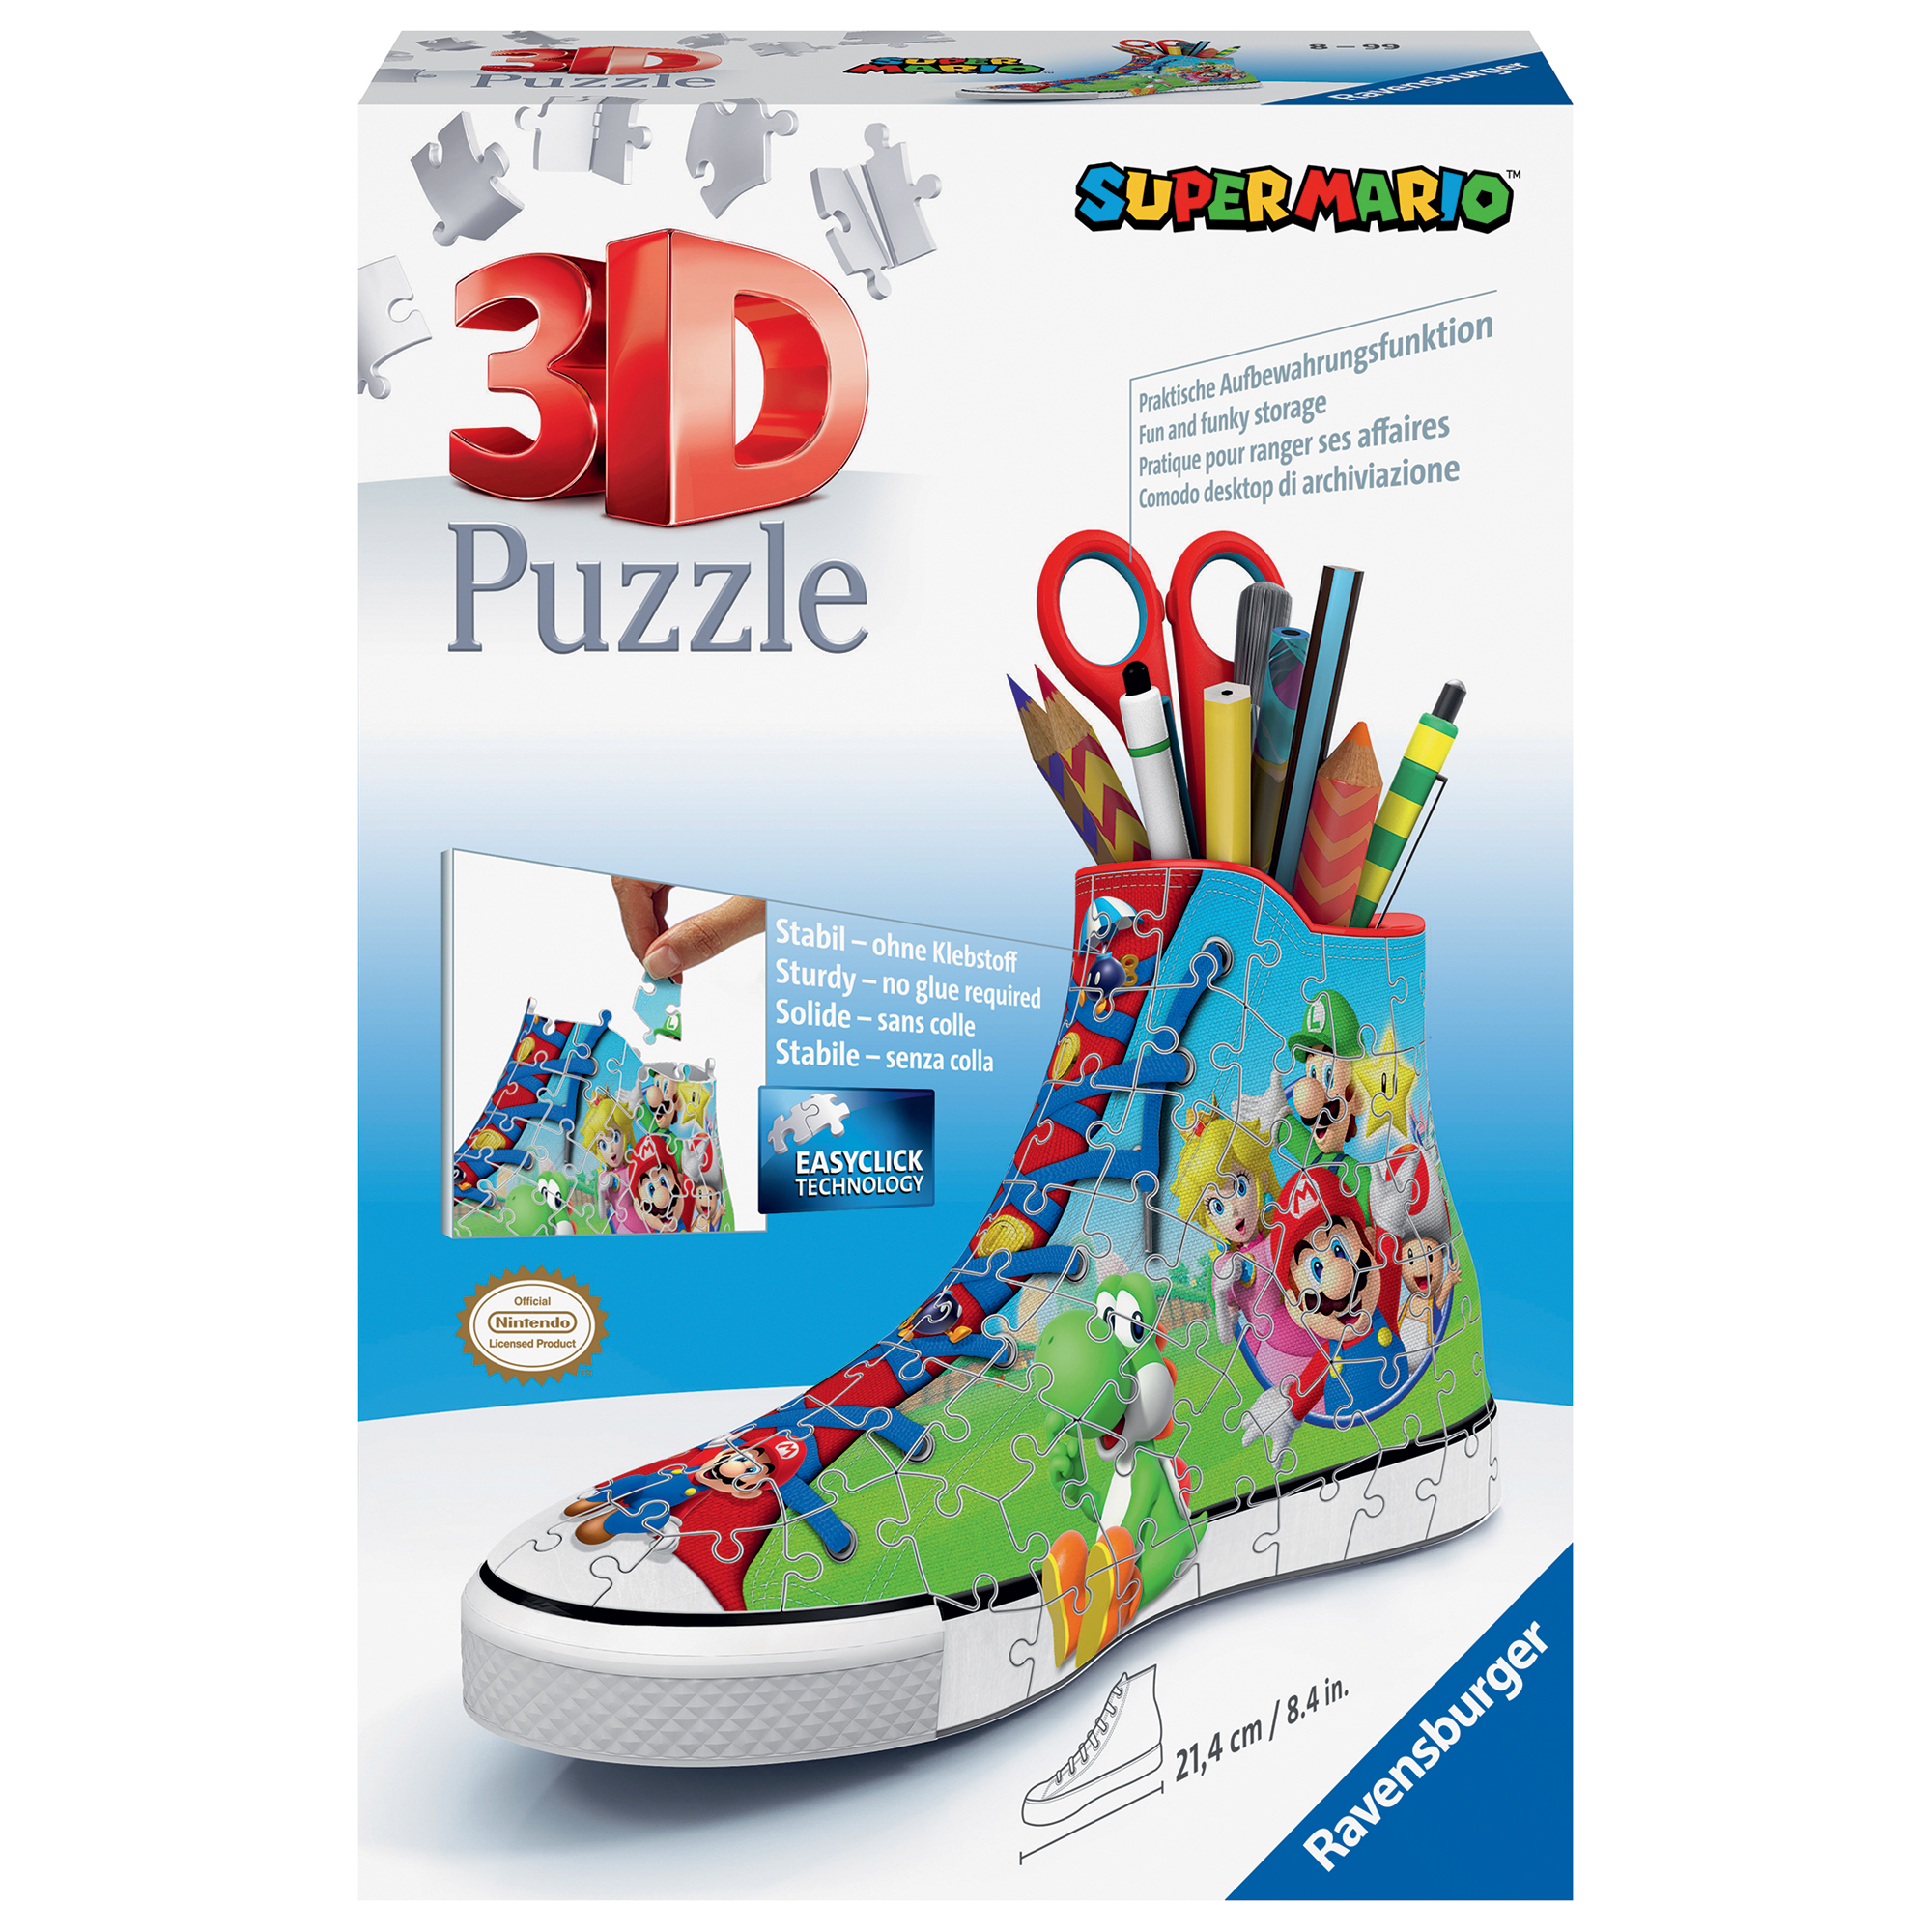 Puzzle 3D Sneaker Super Mario, 106 pezzi - Ravensburger